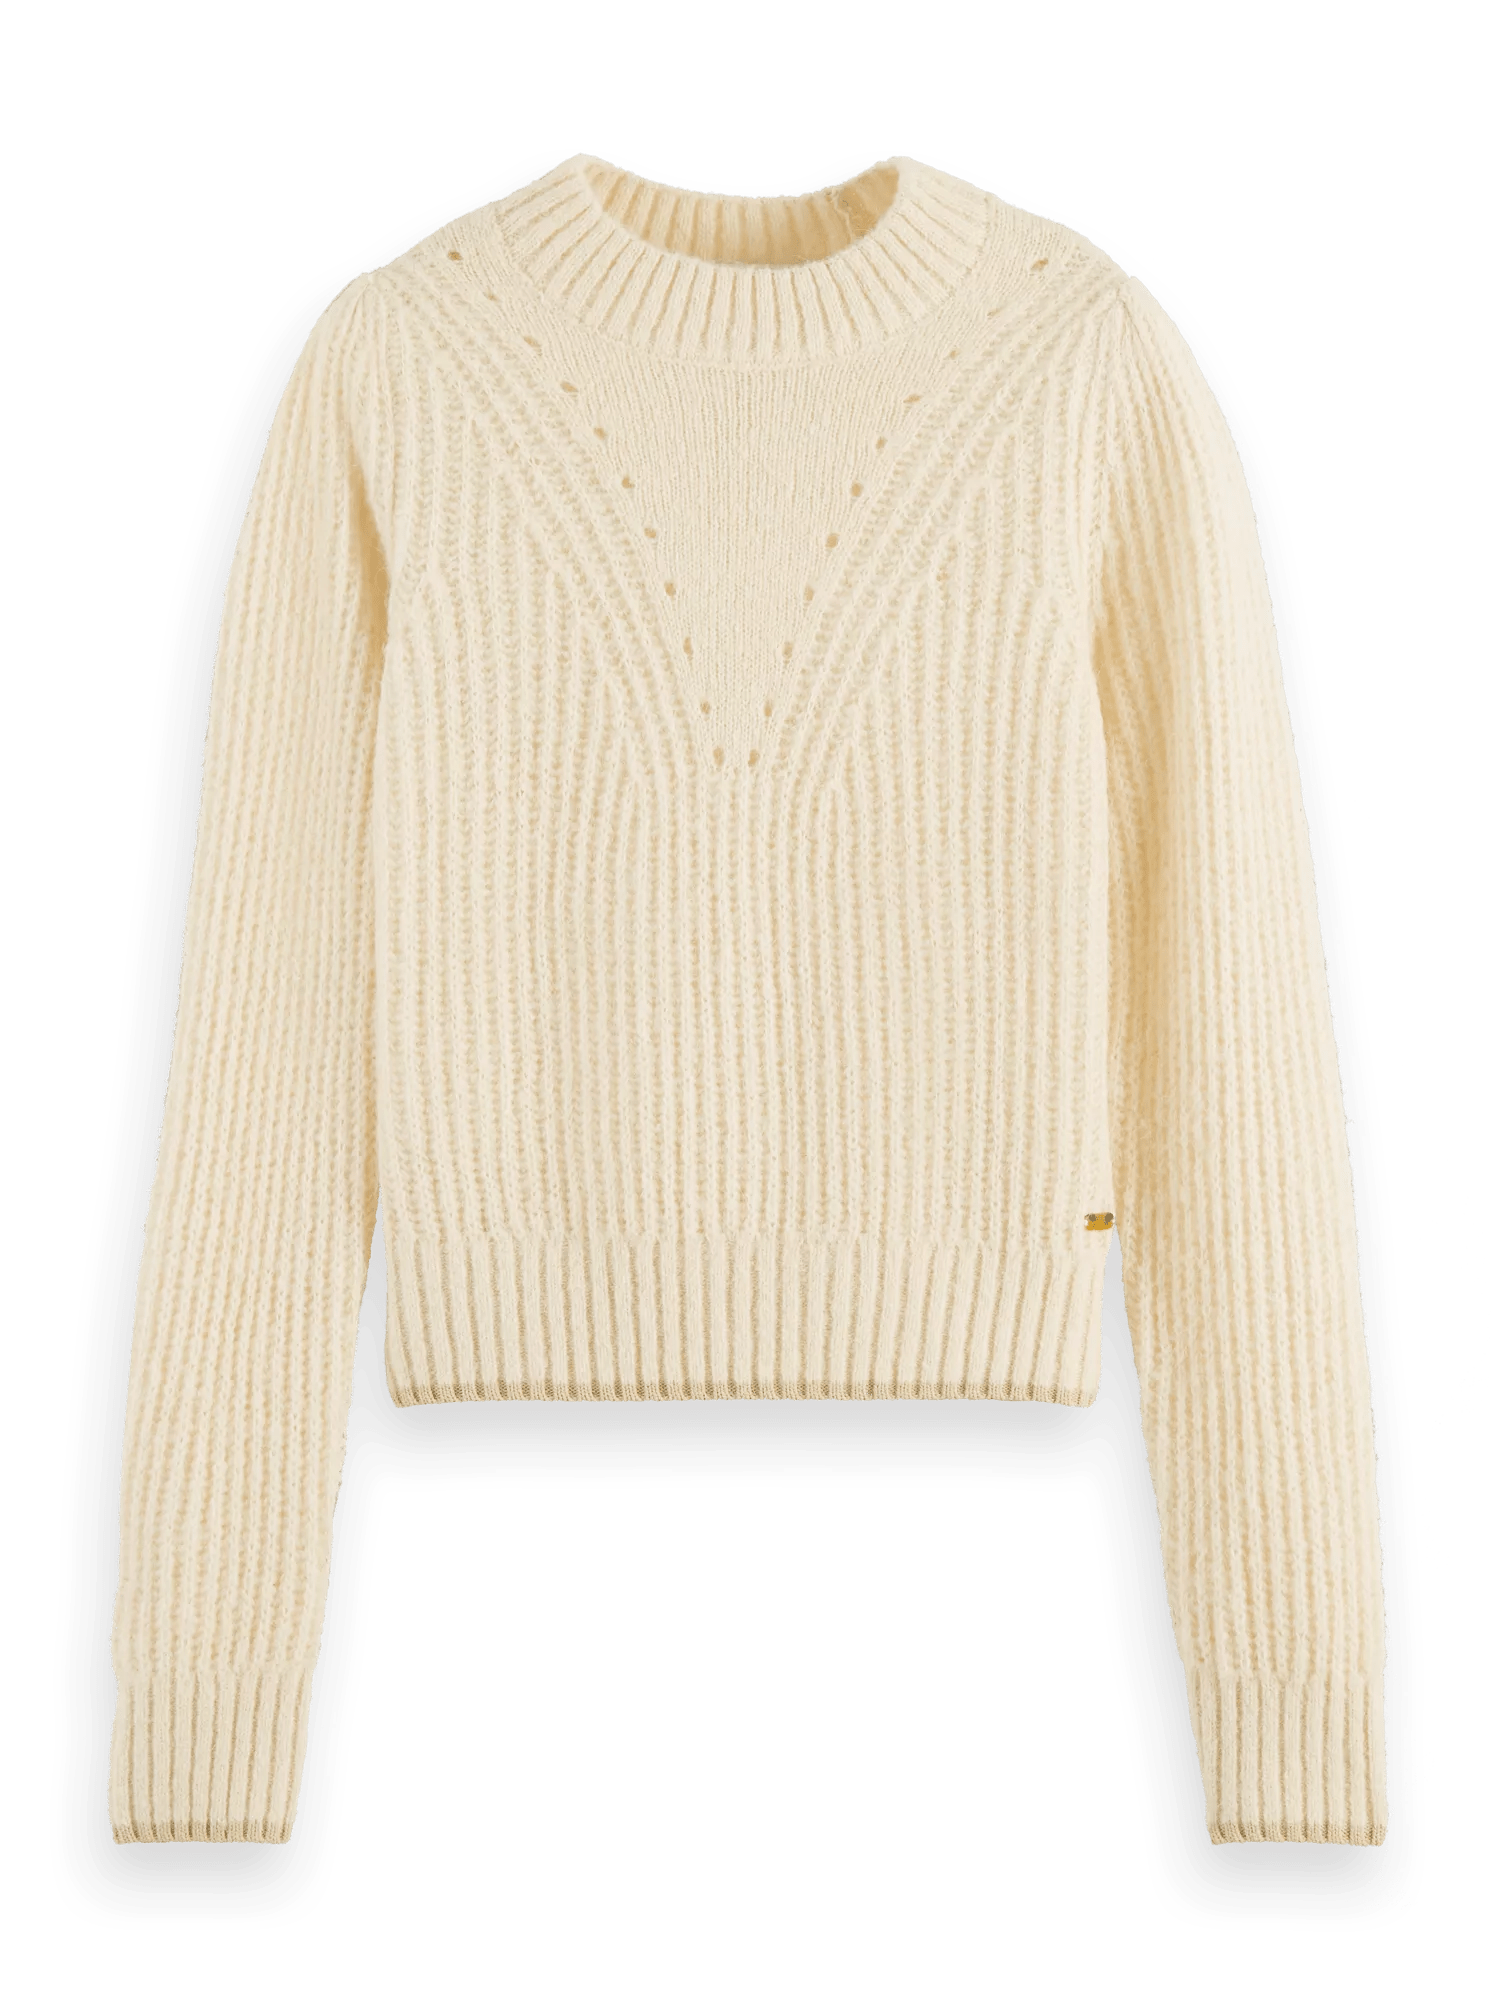 Scotch & Soda Fuzzy knitted puffy sleeve sweater FNT